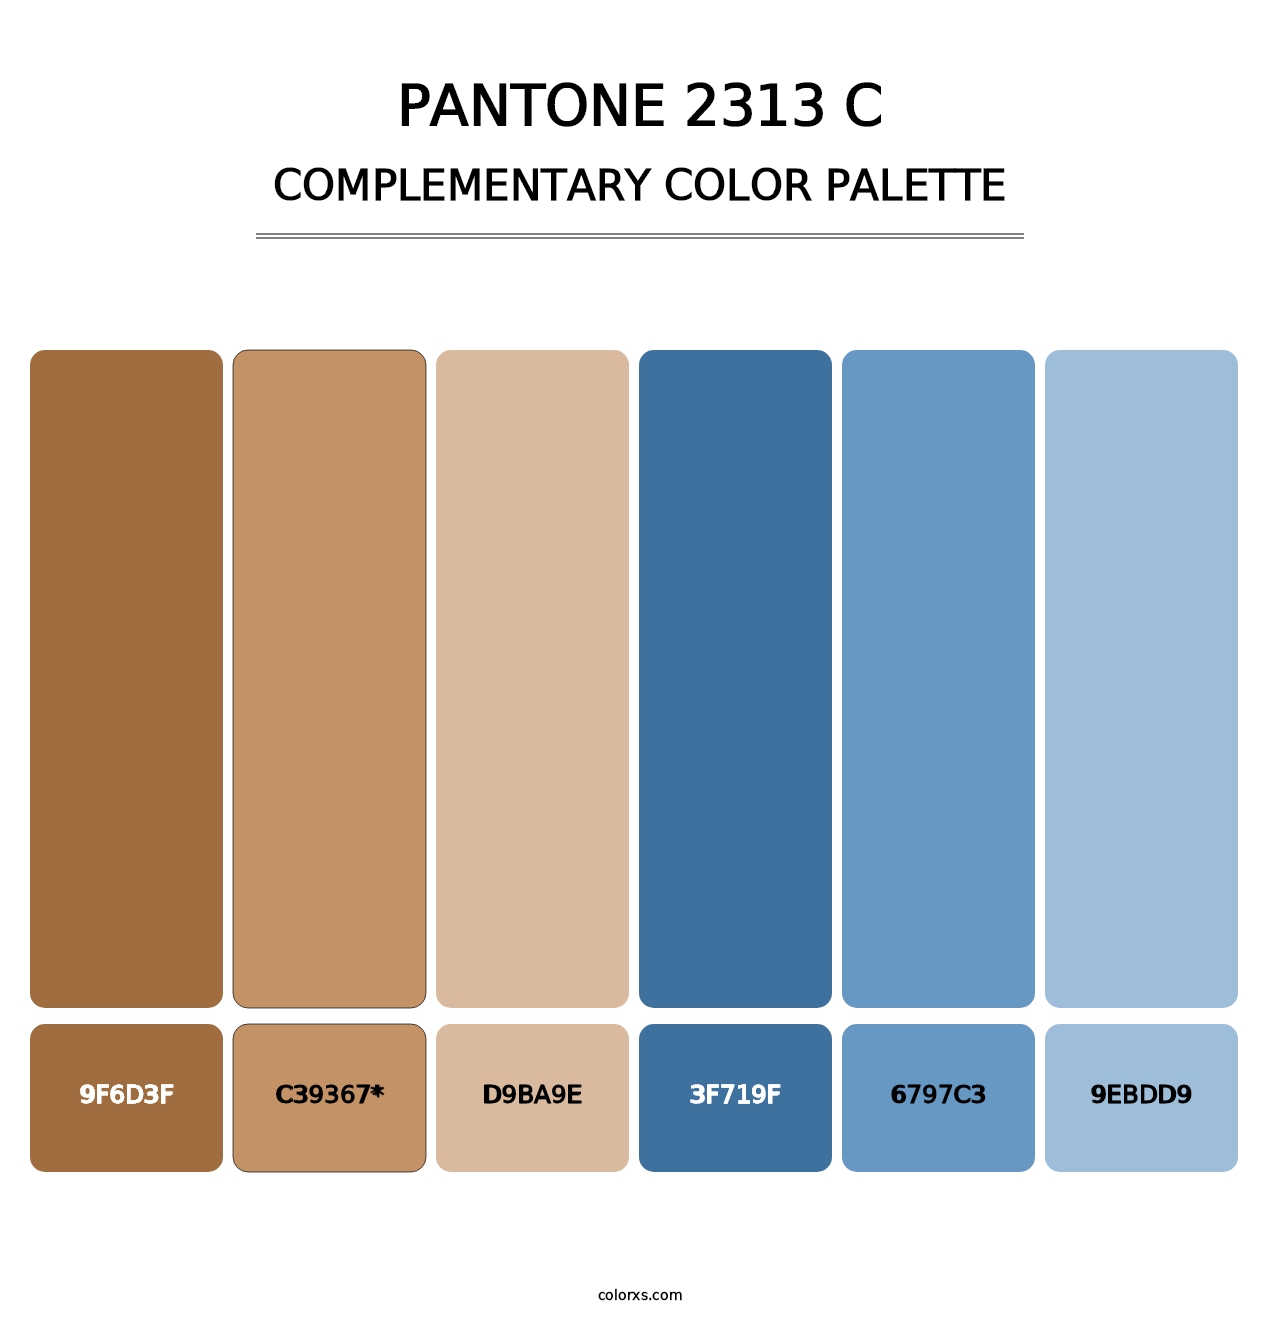 PANTONE 2313 C - Complementary Color Palette